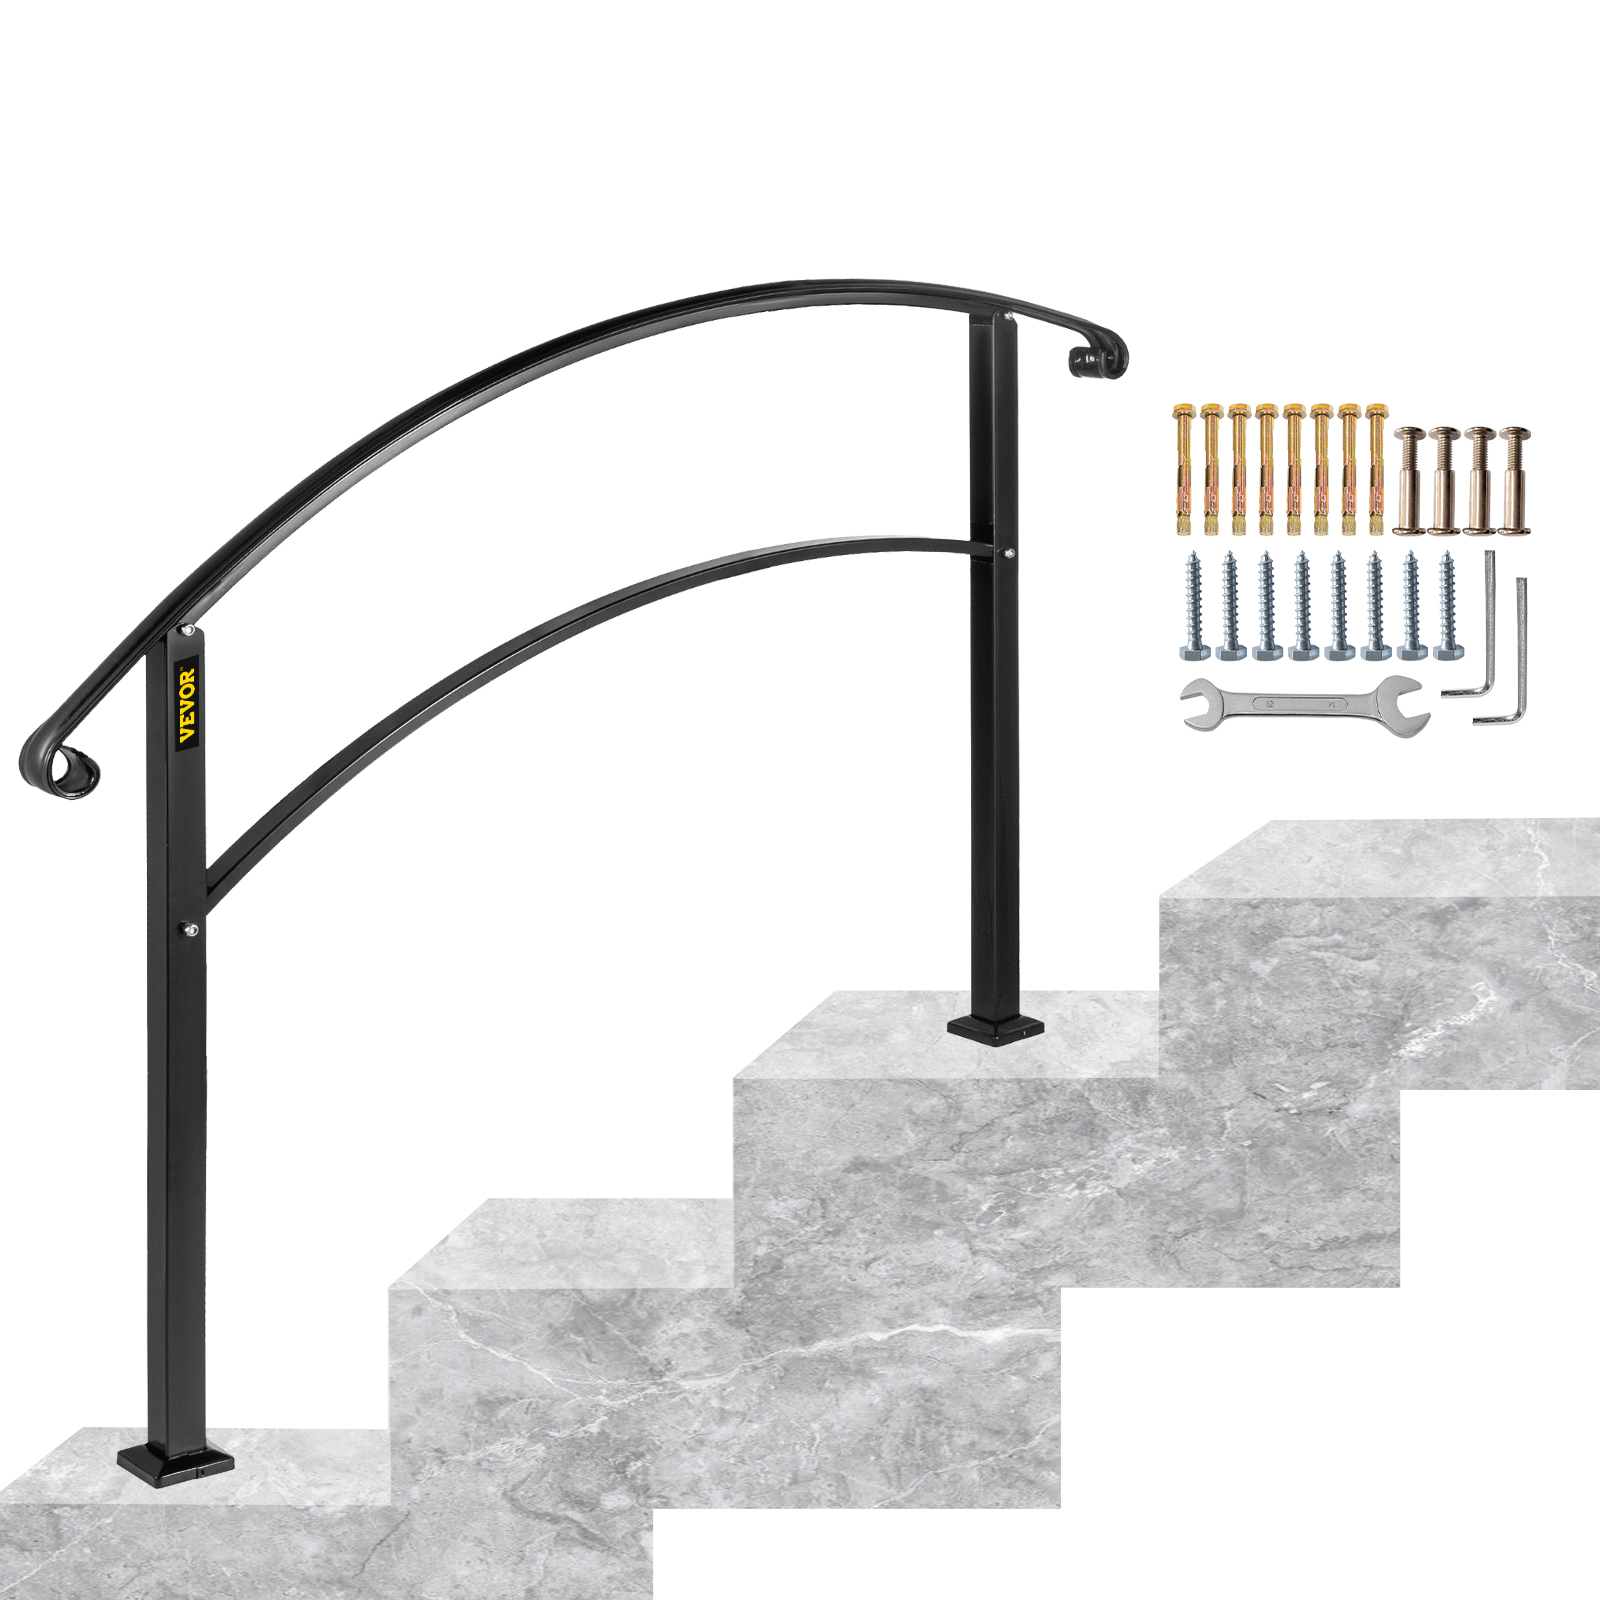 3ft Adjustable Iron Handrail Black Fits 2 Or 3 Steps Handrail Concrete Decor от Vevor Many GEOs